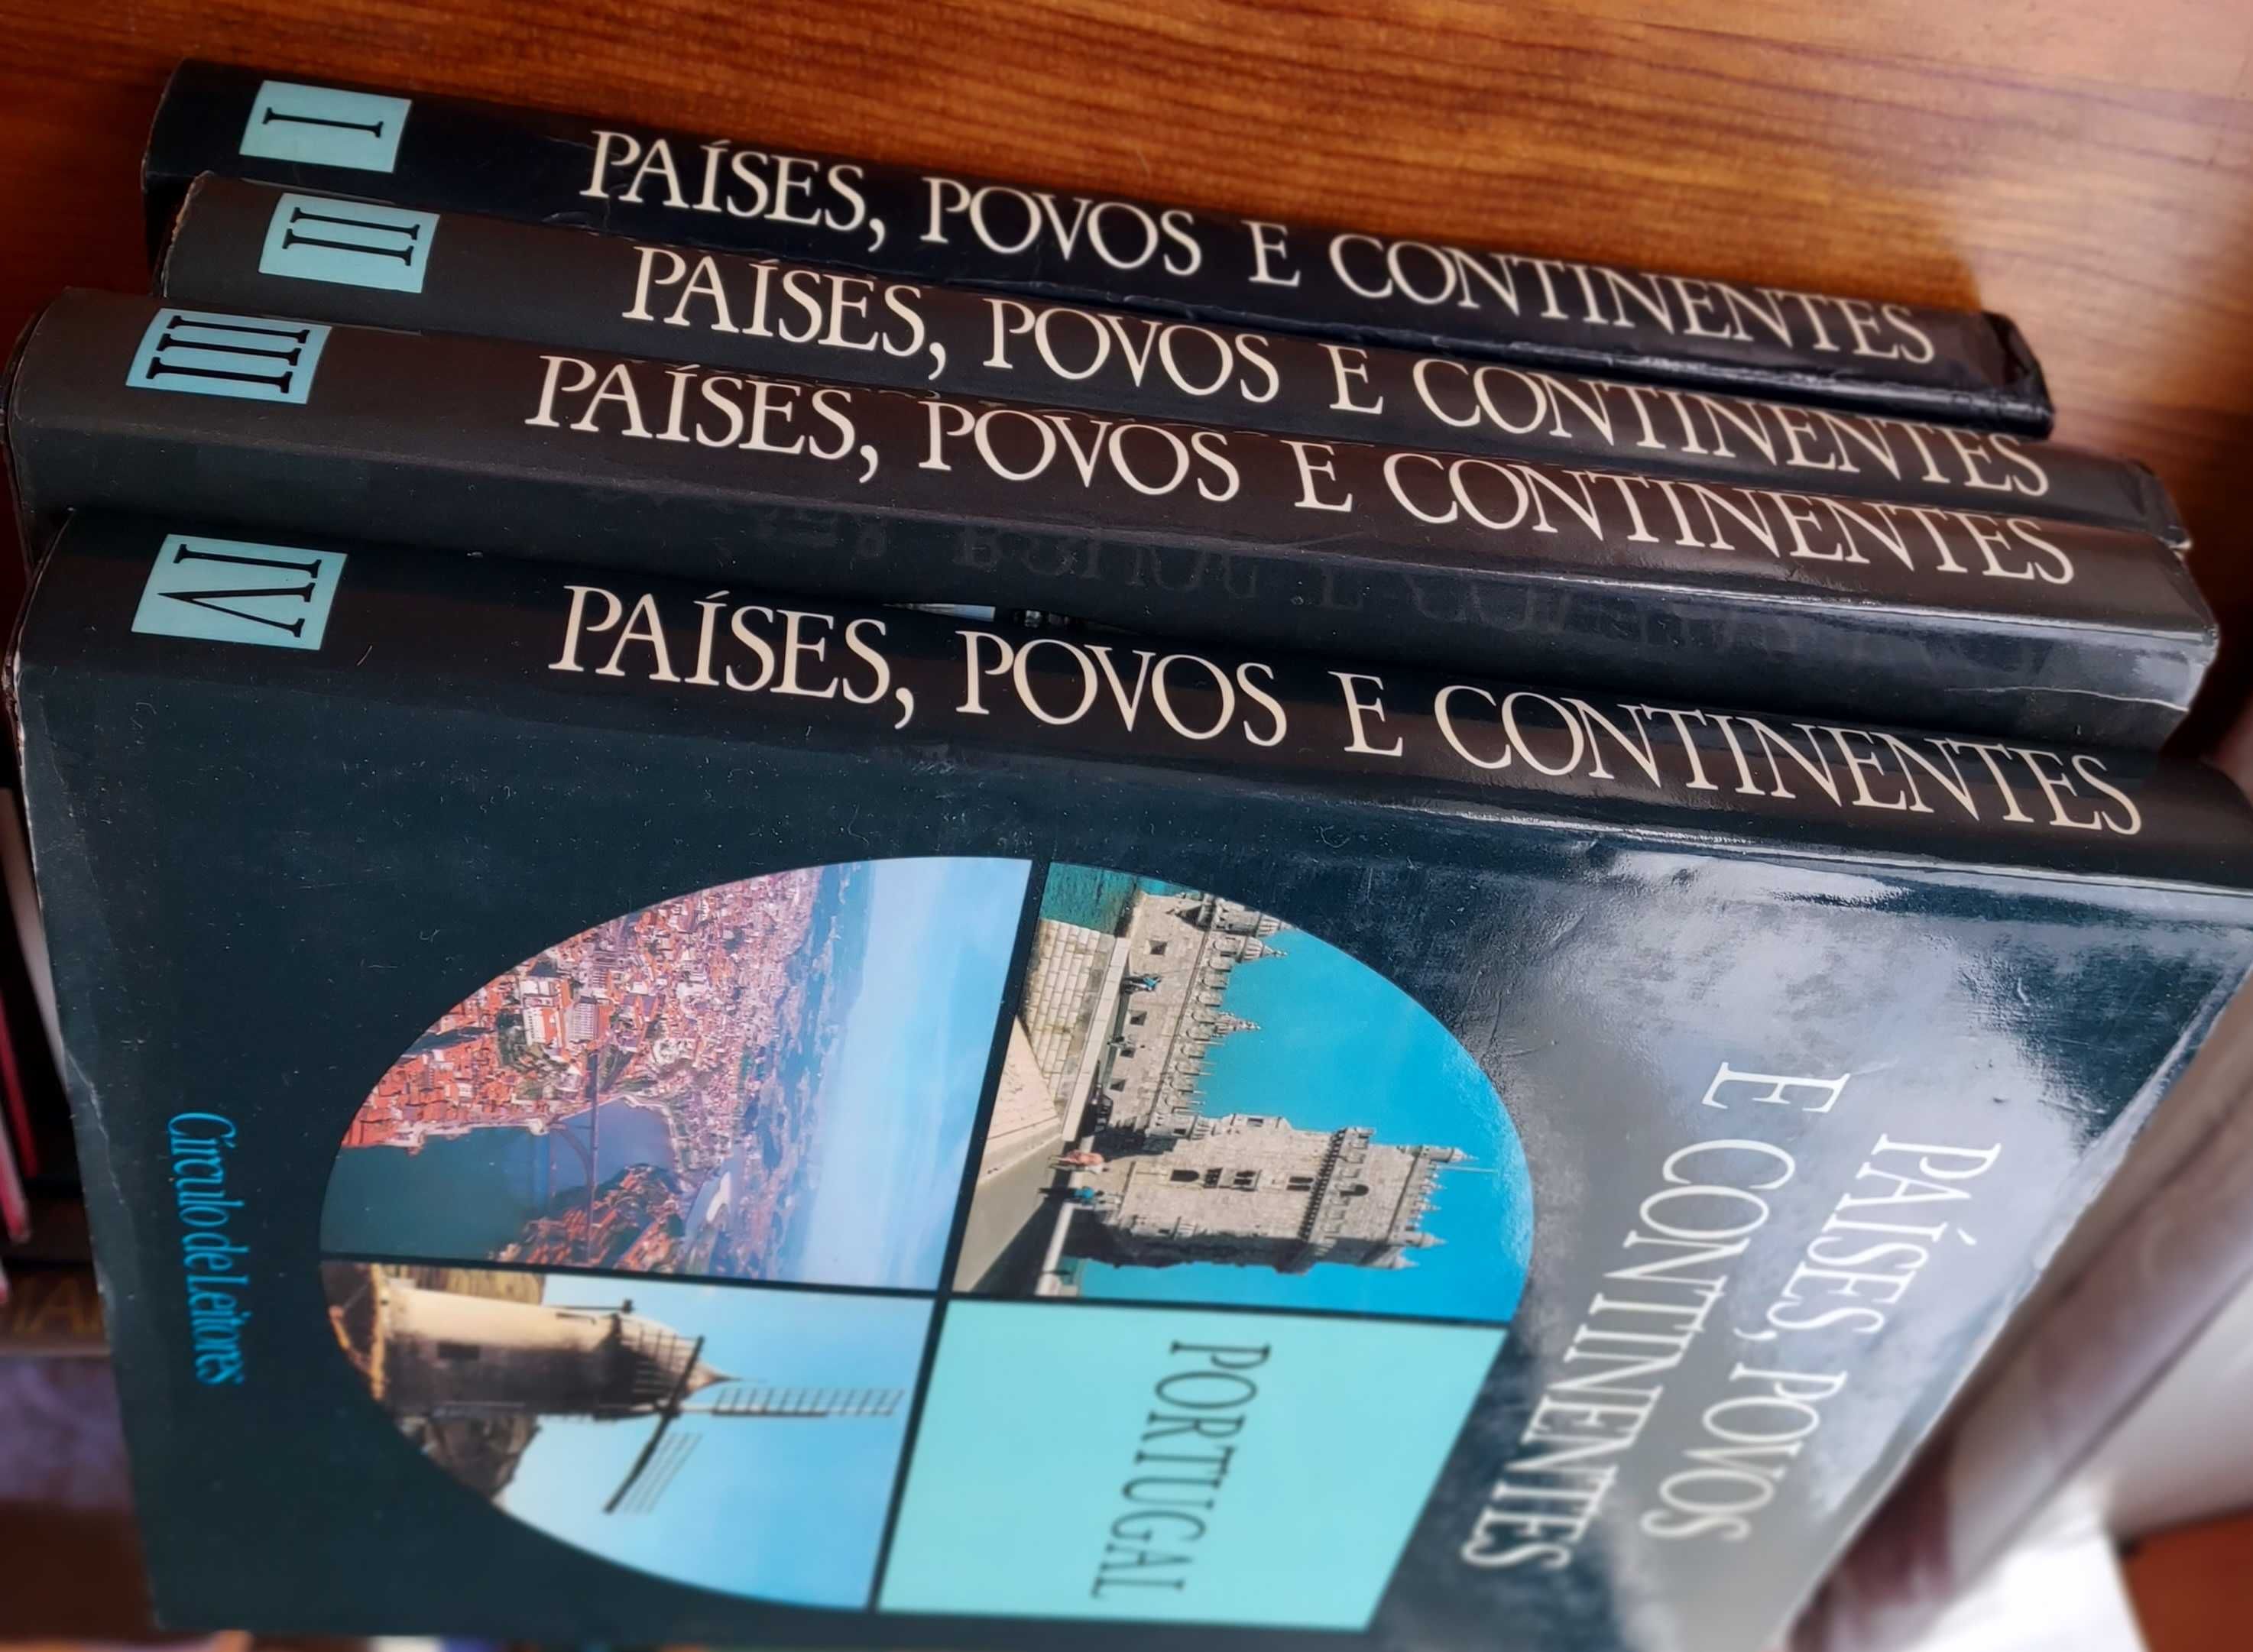 Paises povos e continentes- 4 volumes grandes